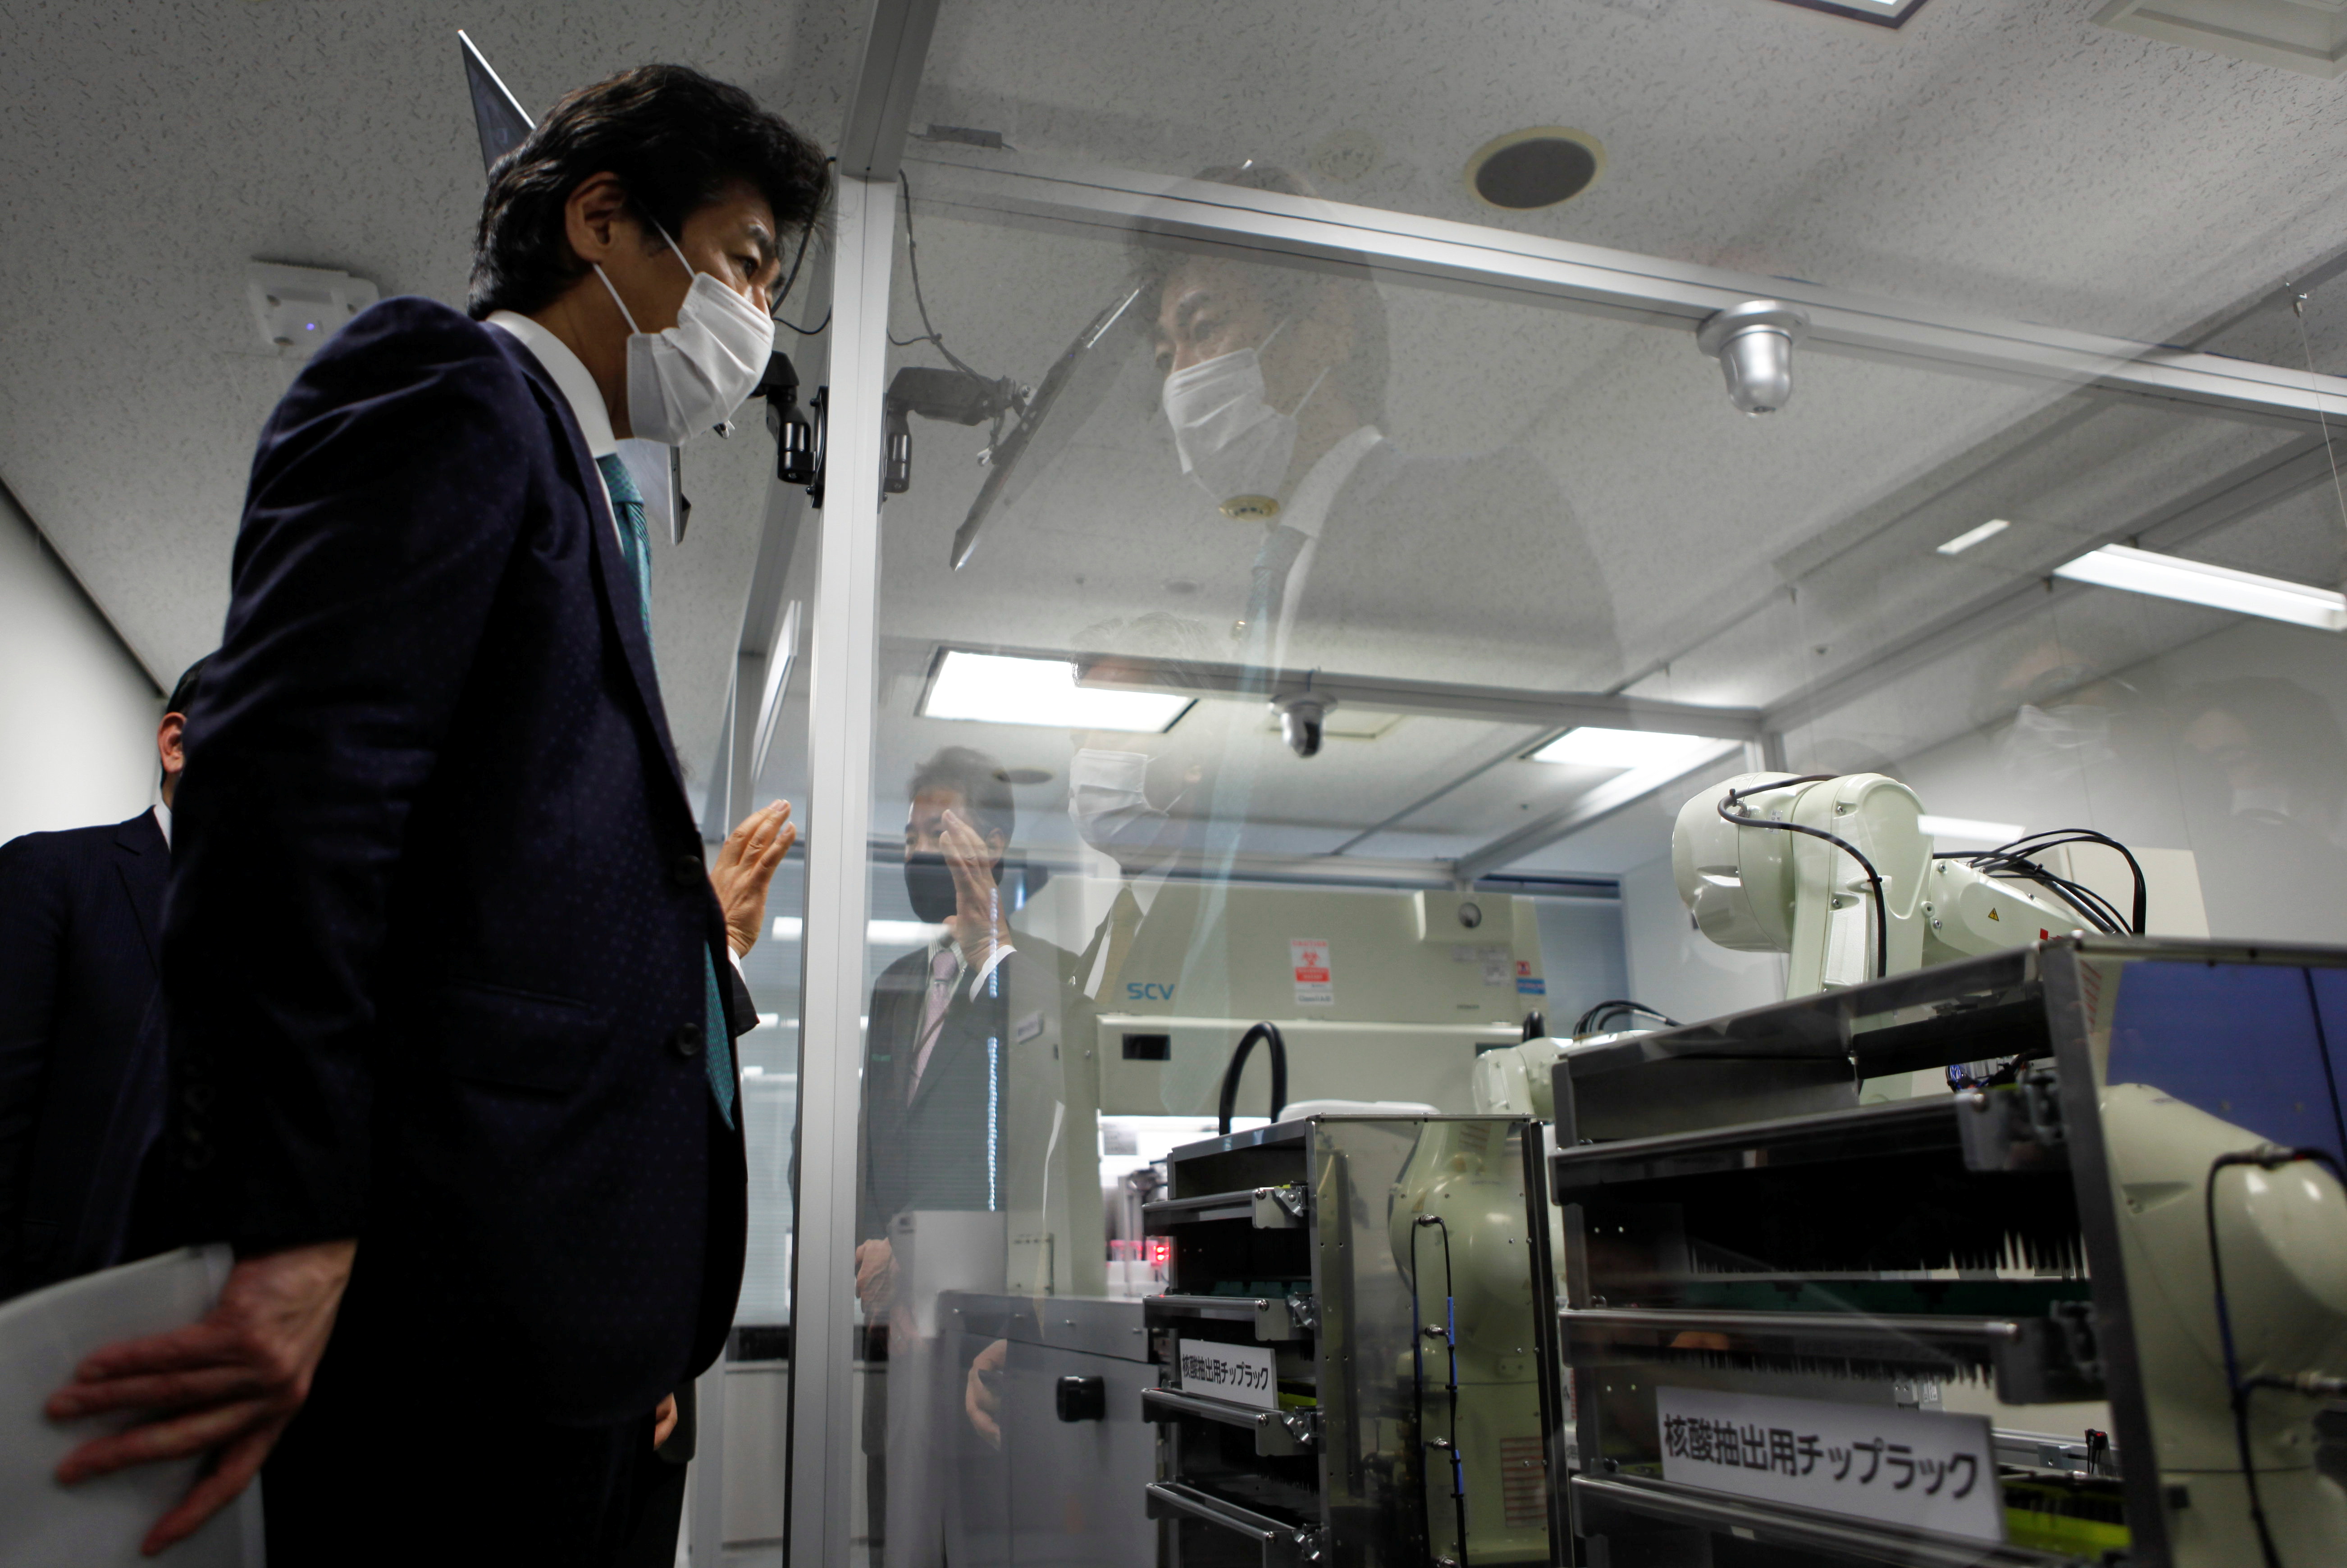 Japan's Health Minister Norihisa Tamura visits the Kawasaki Heavy Industries' Tokyo Robot Centre in Tokyo